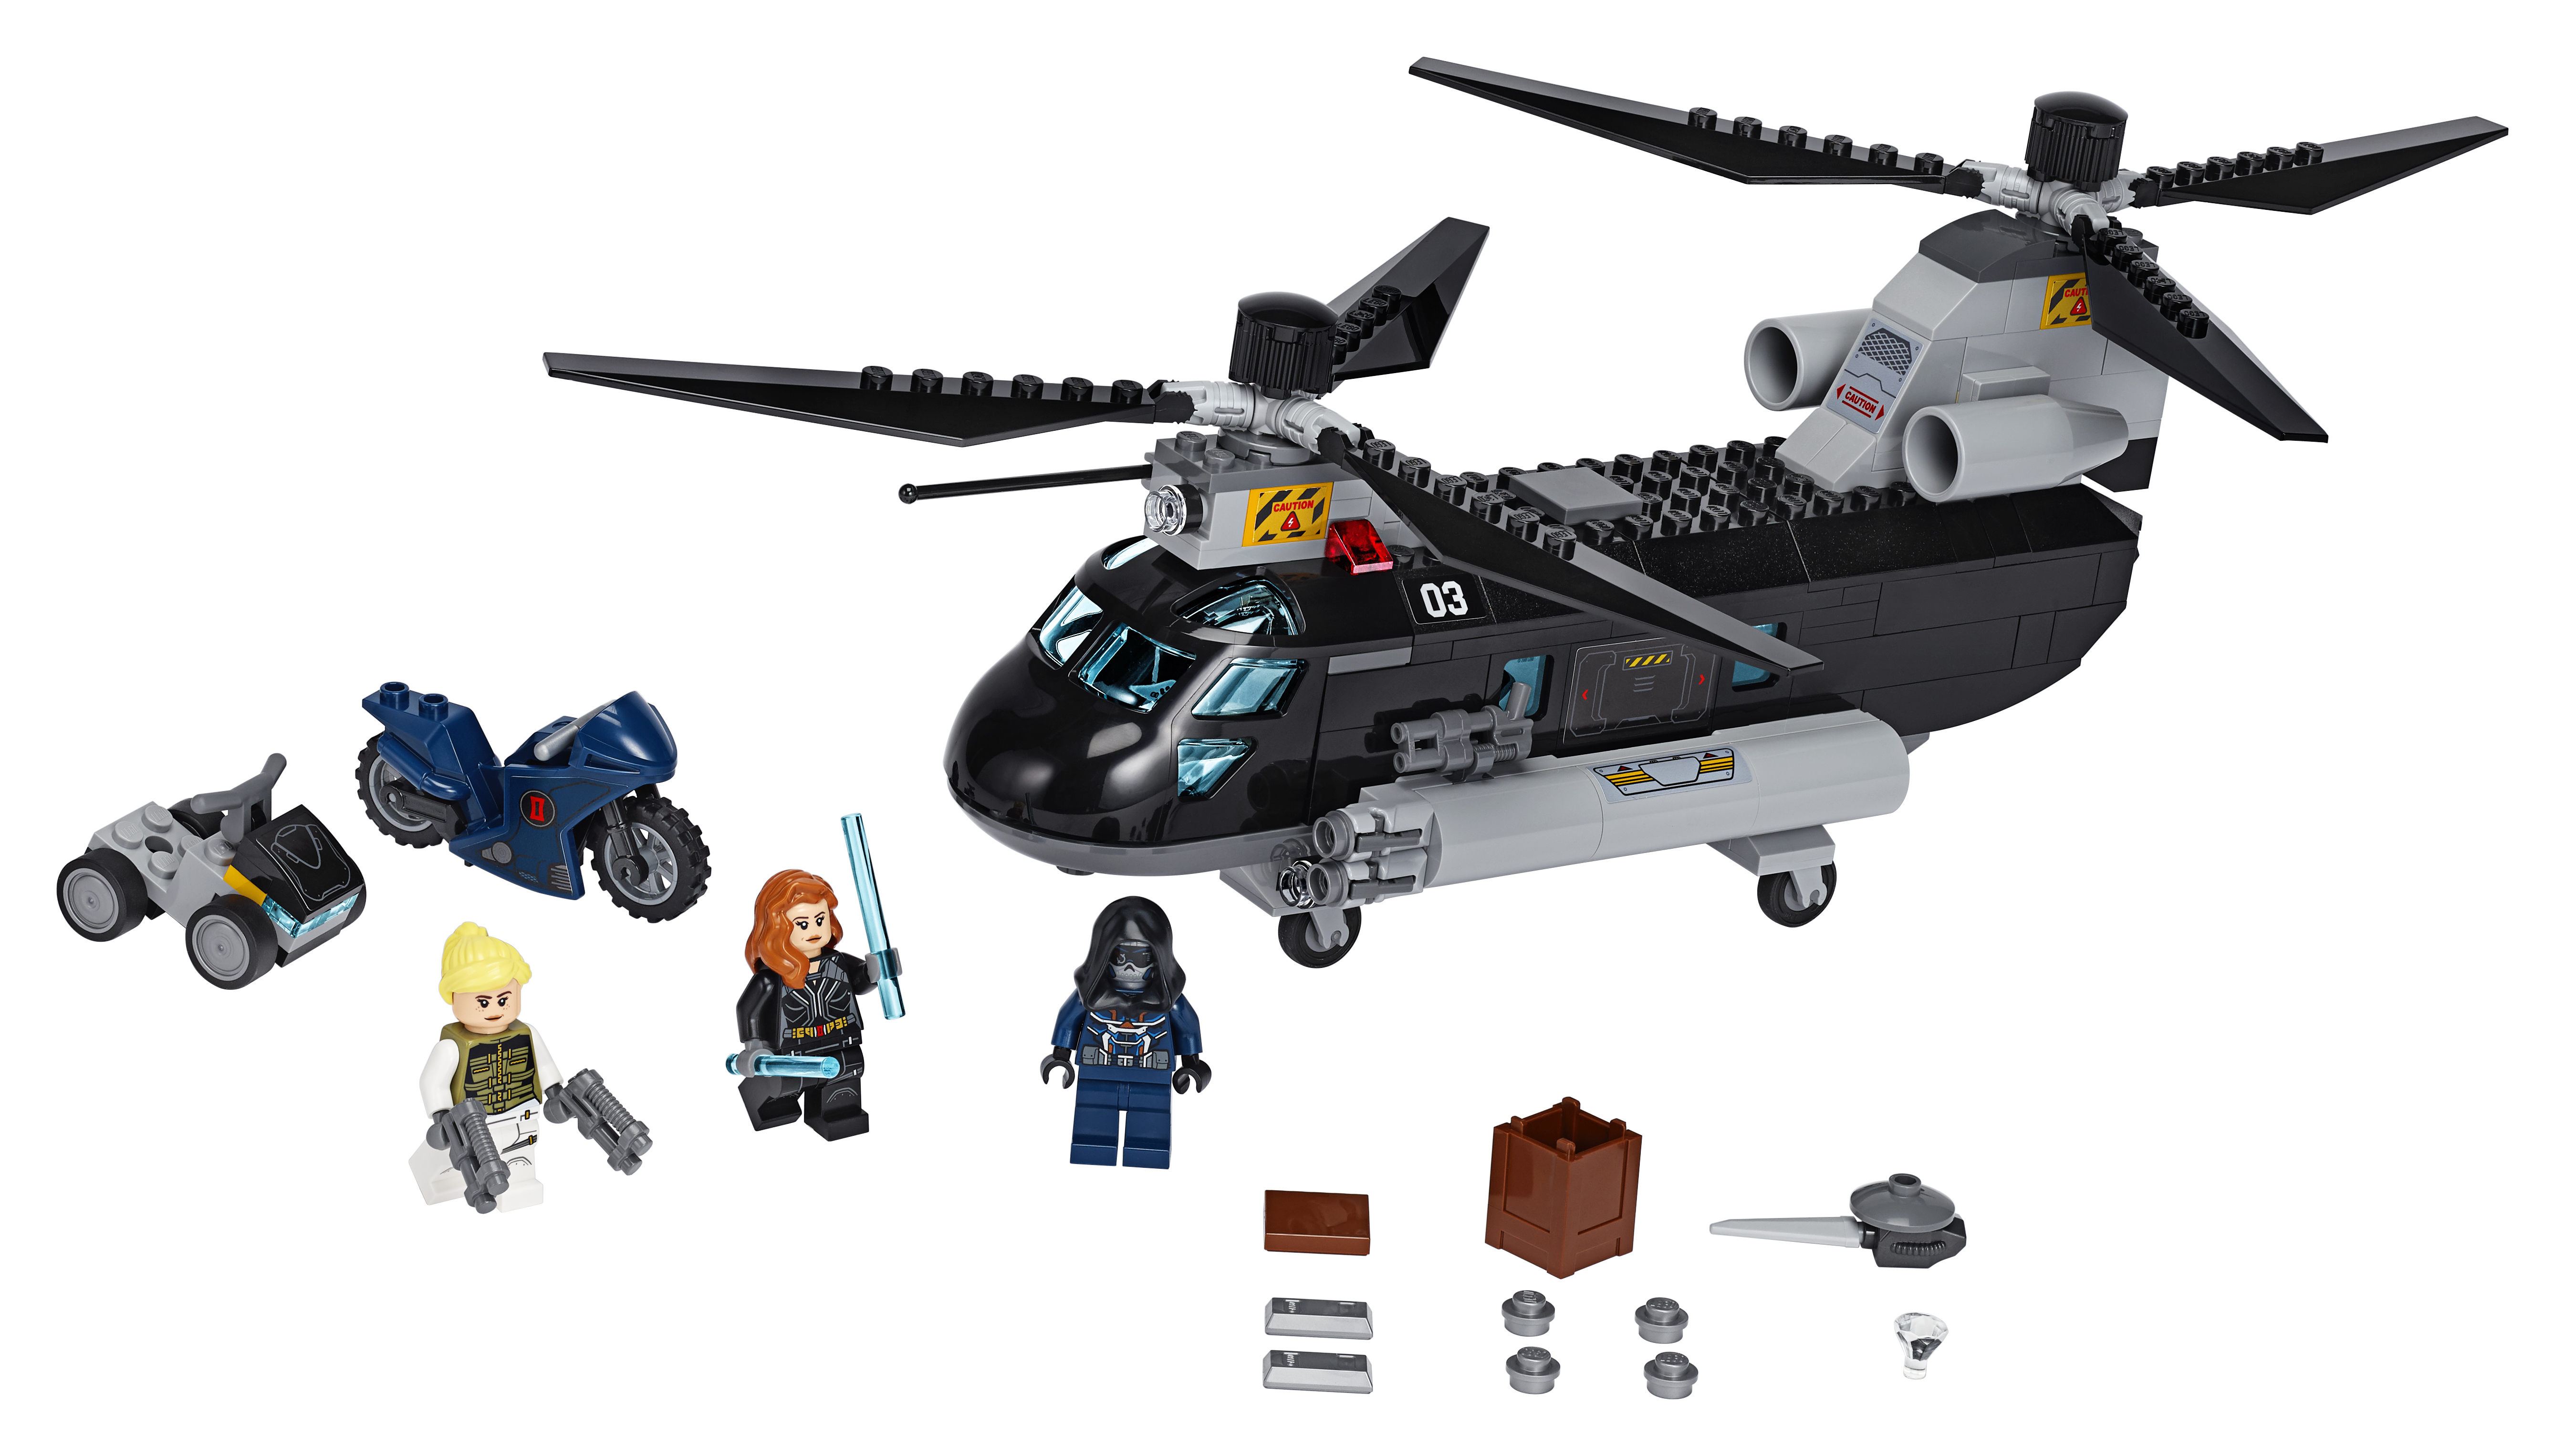 LEGO Marvel Super Heroes Black Widows Hubschrauber-Verfolgungsjagd